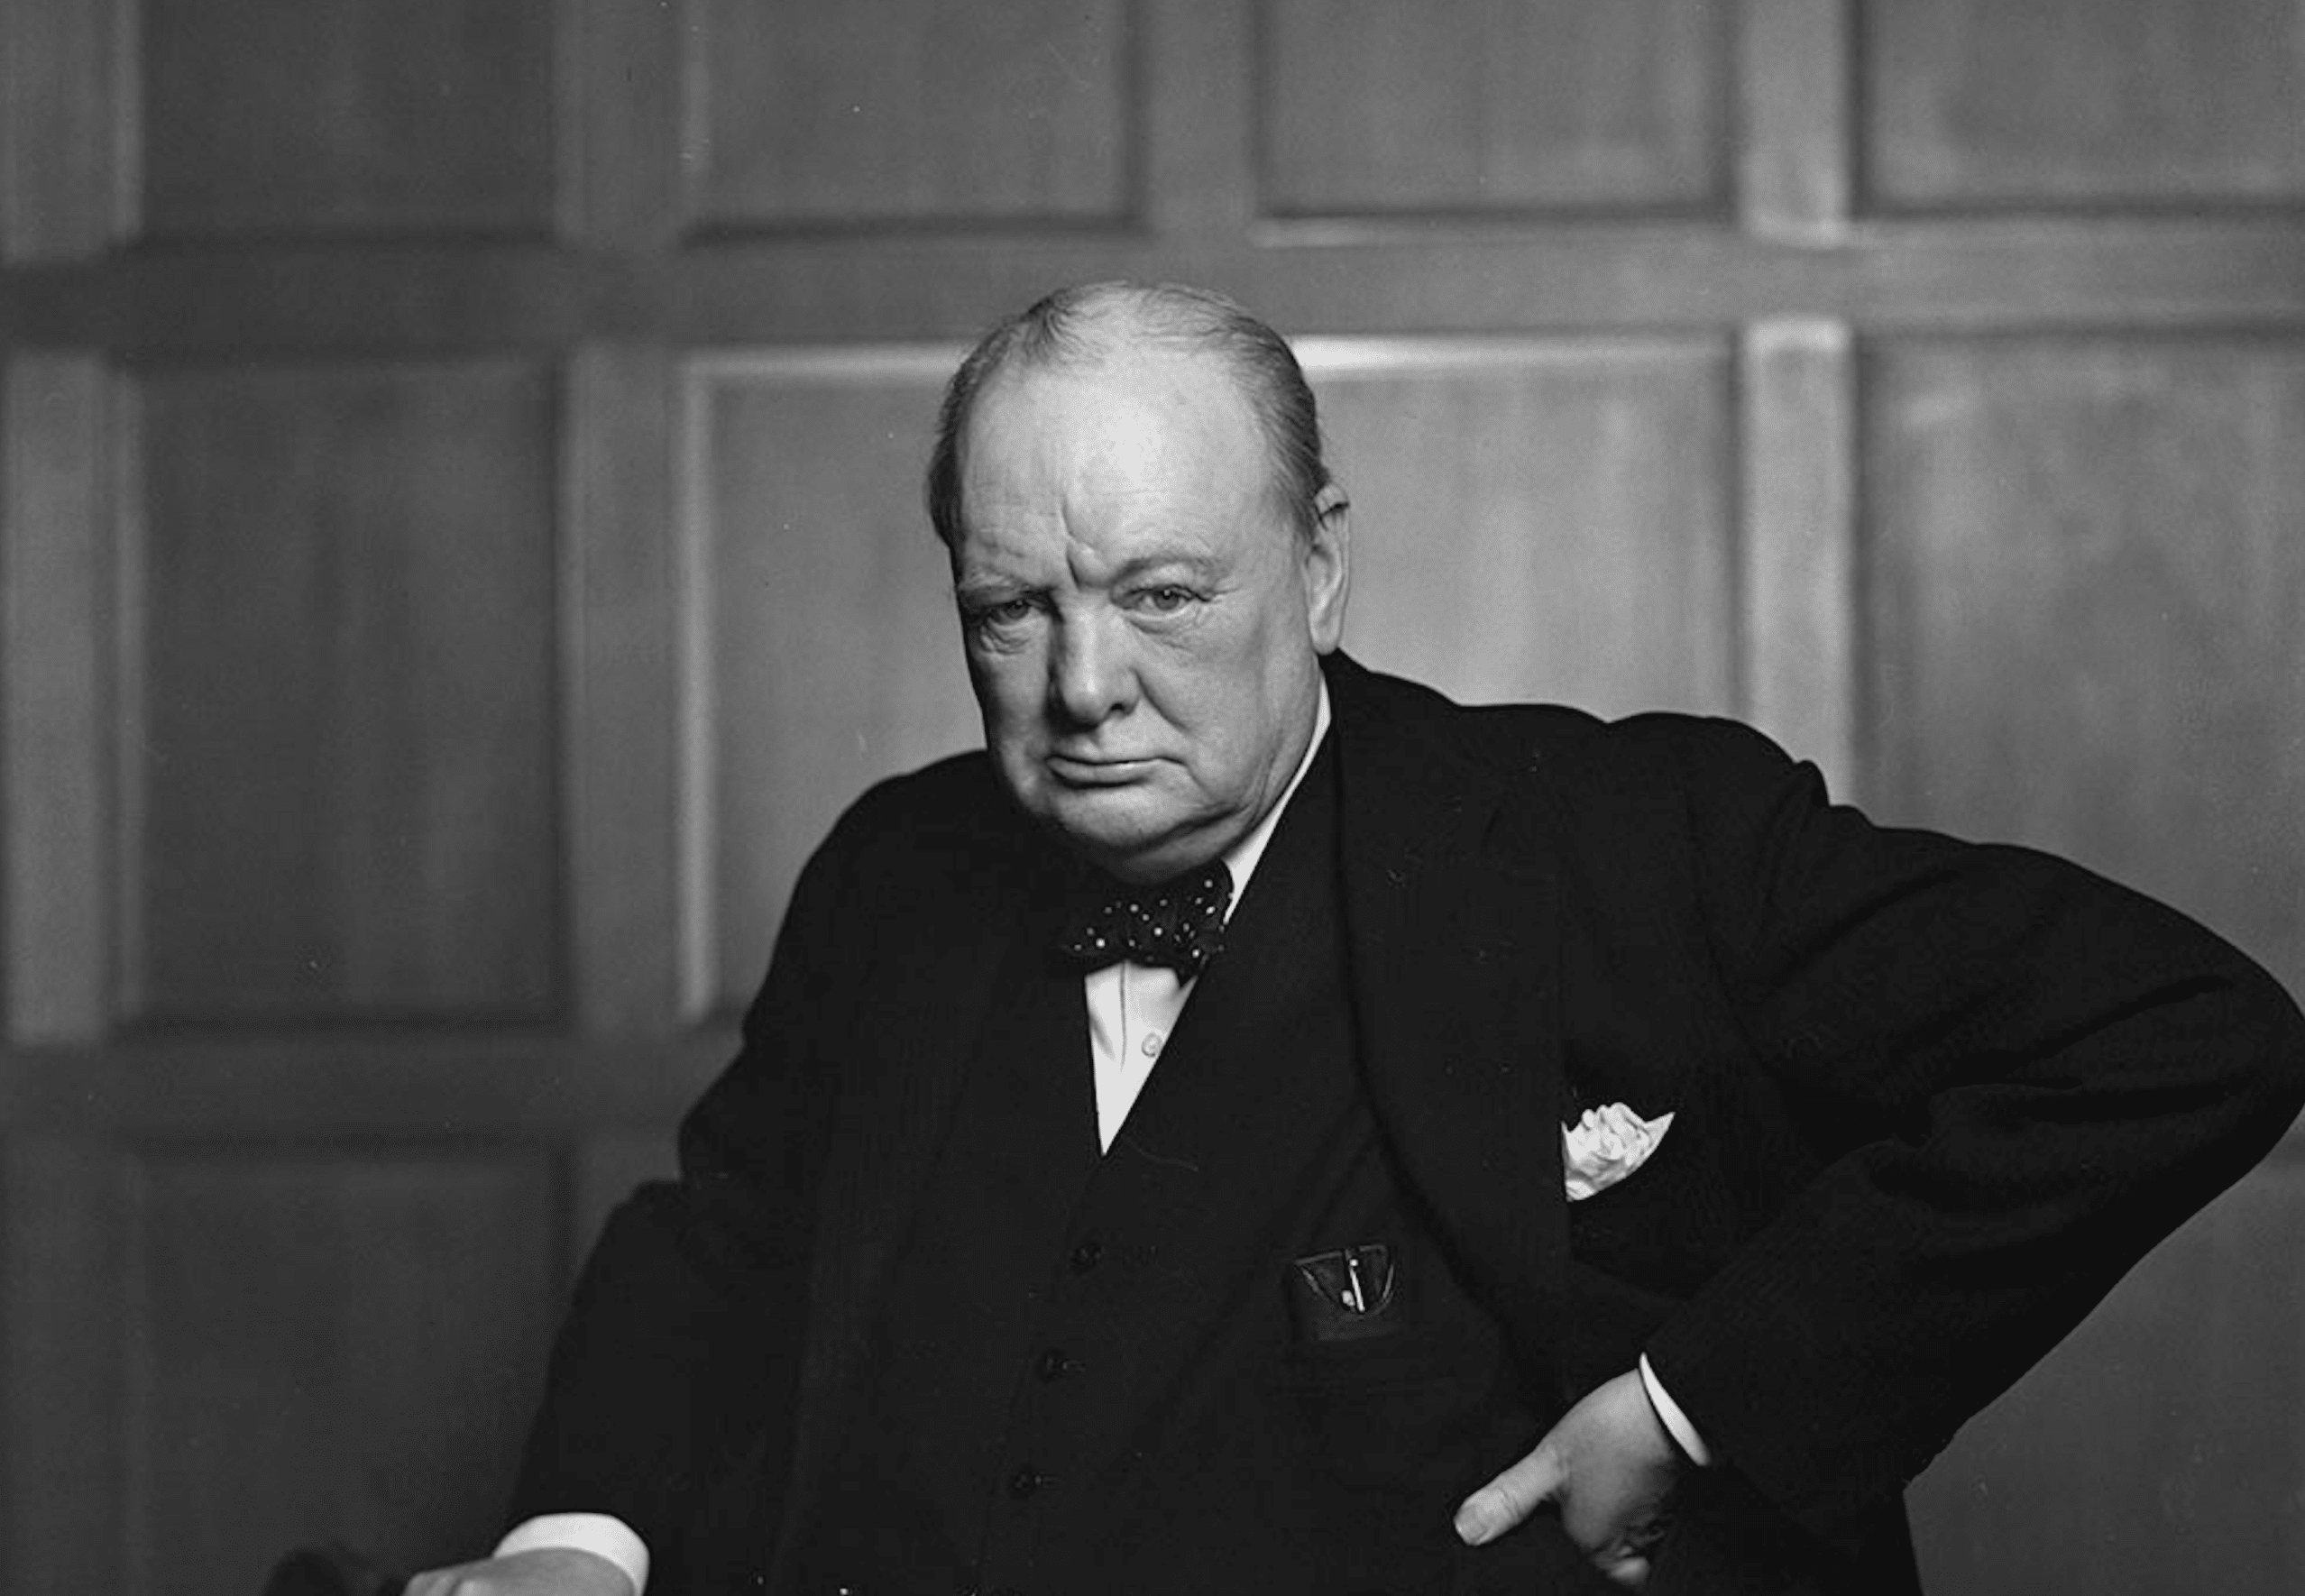 Sir Winston Churchill
Wiki Commons